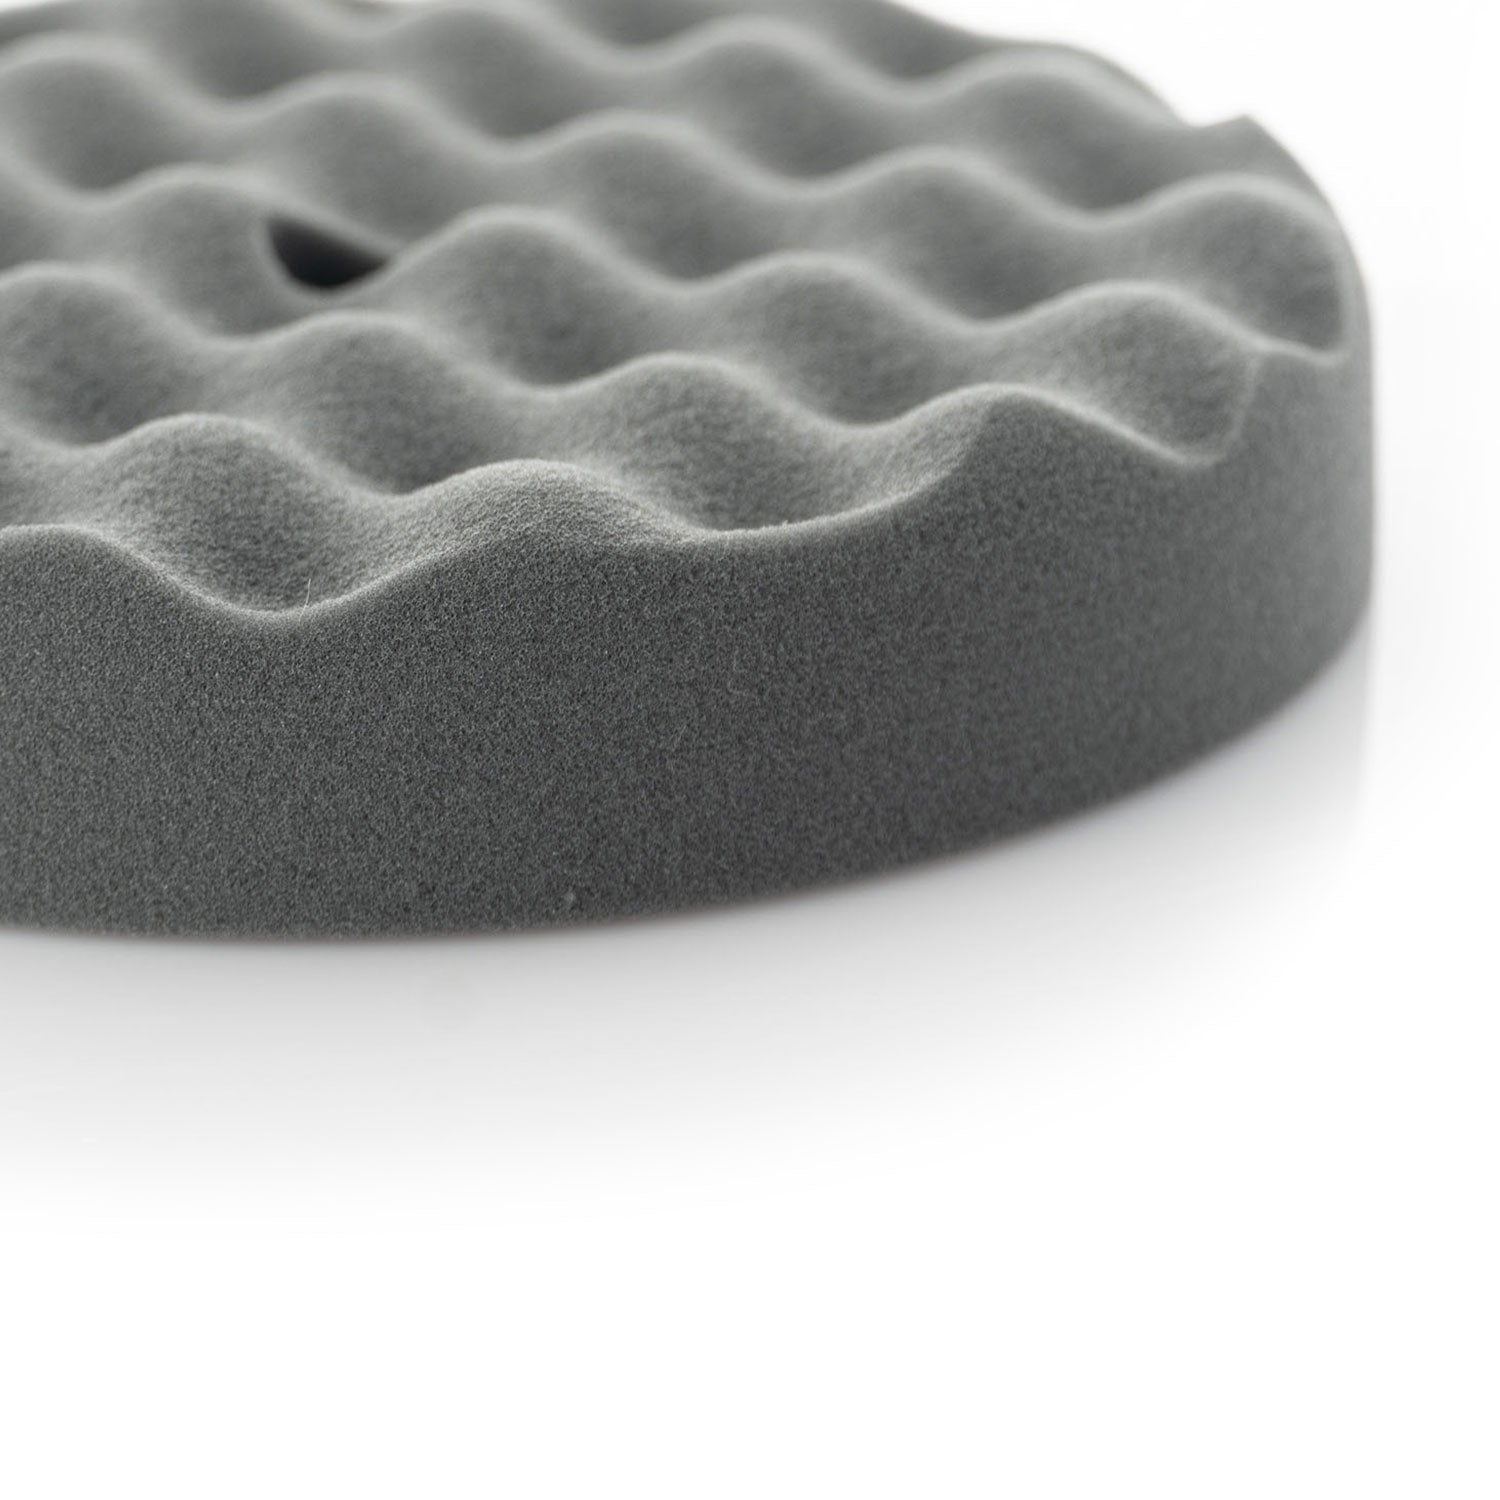 stinger-p02-black-waffle-foam-pad-close-up